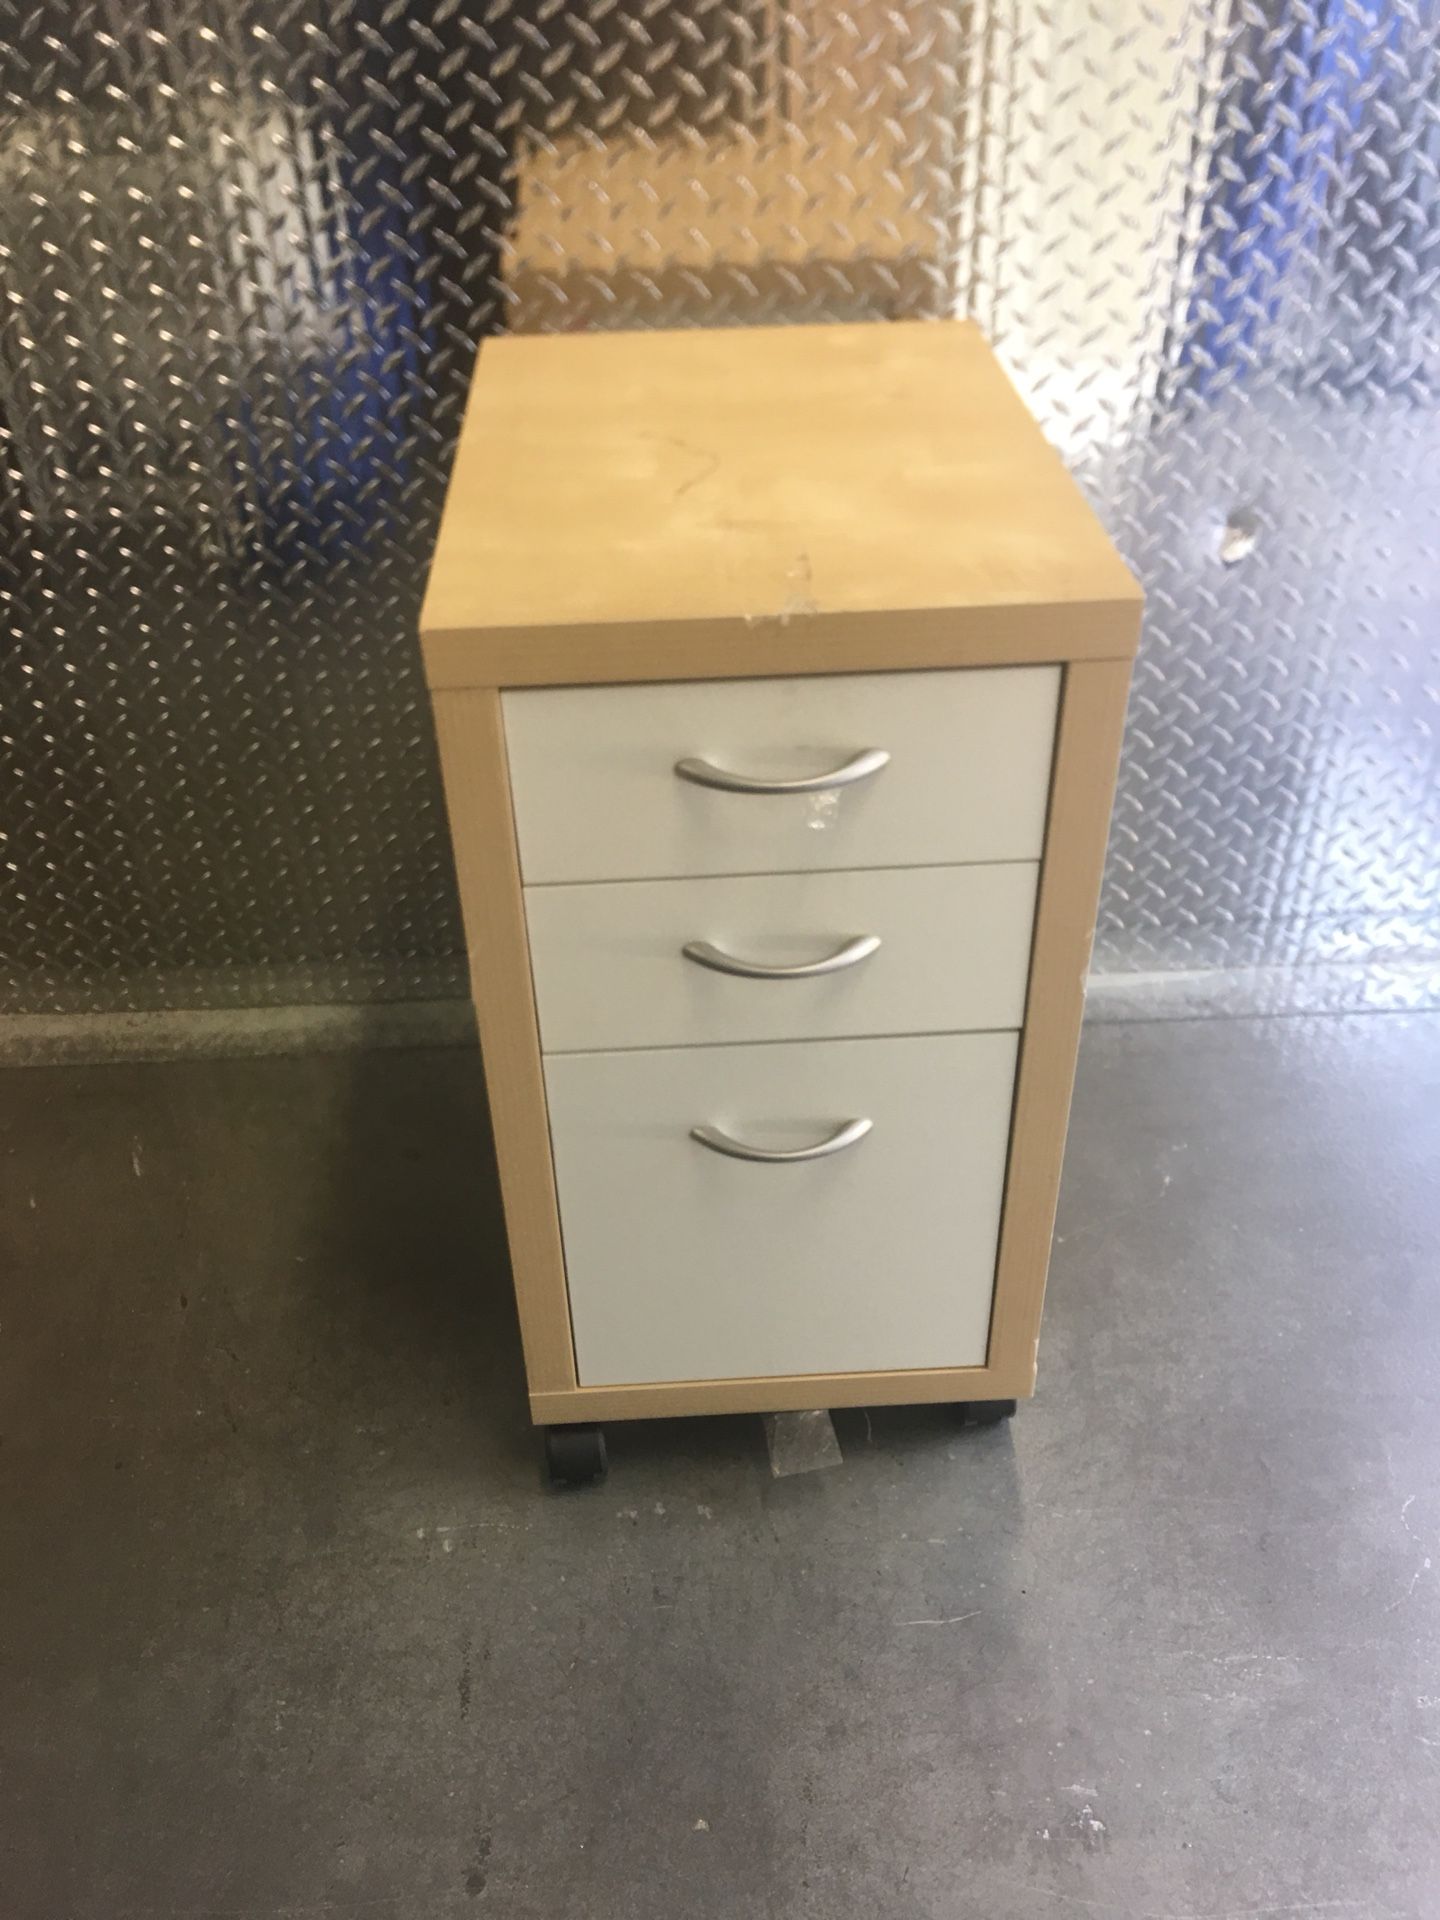 IKEA file cabinet